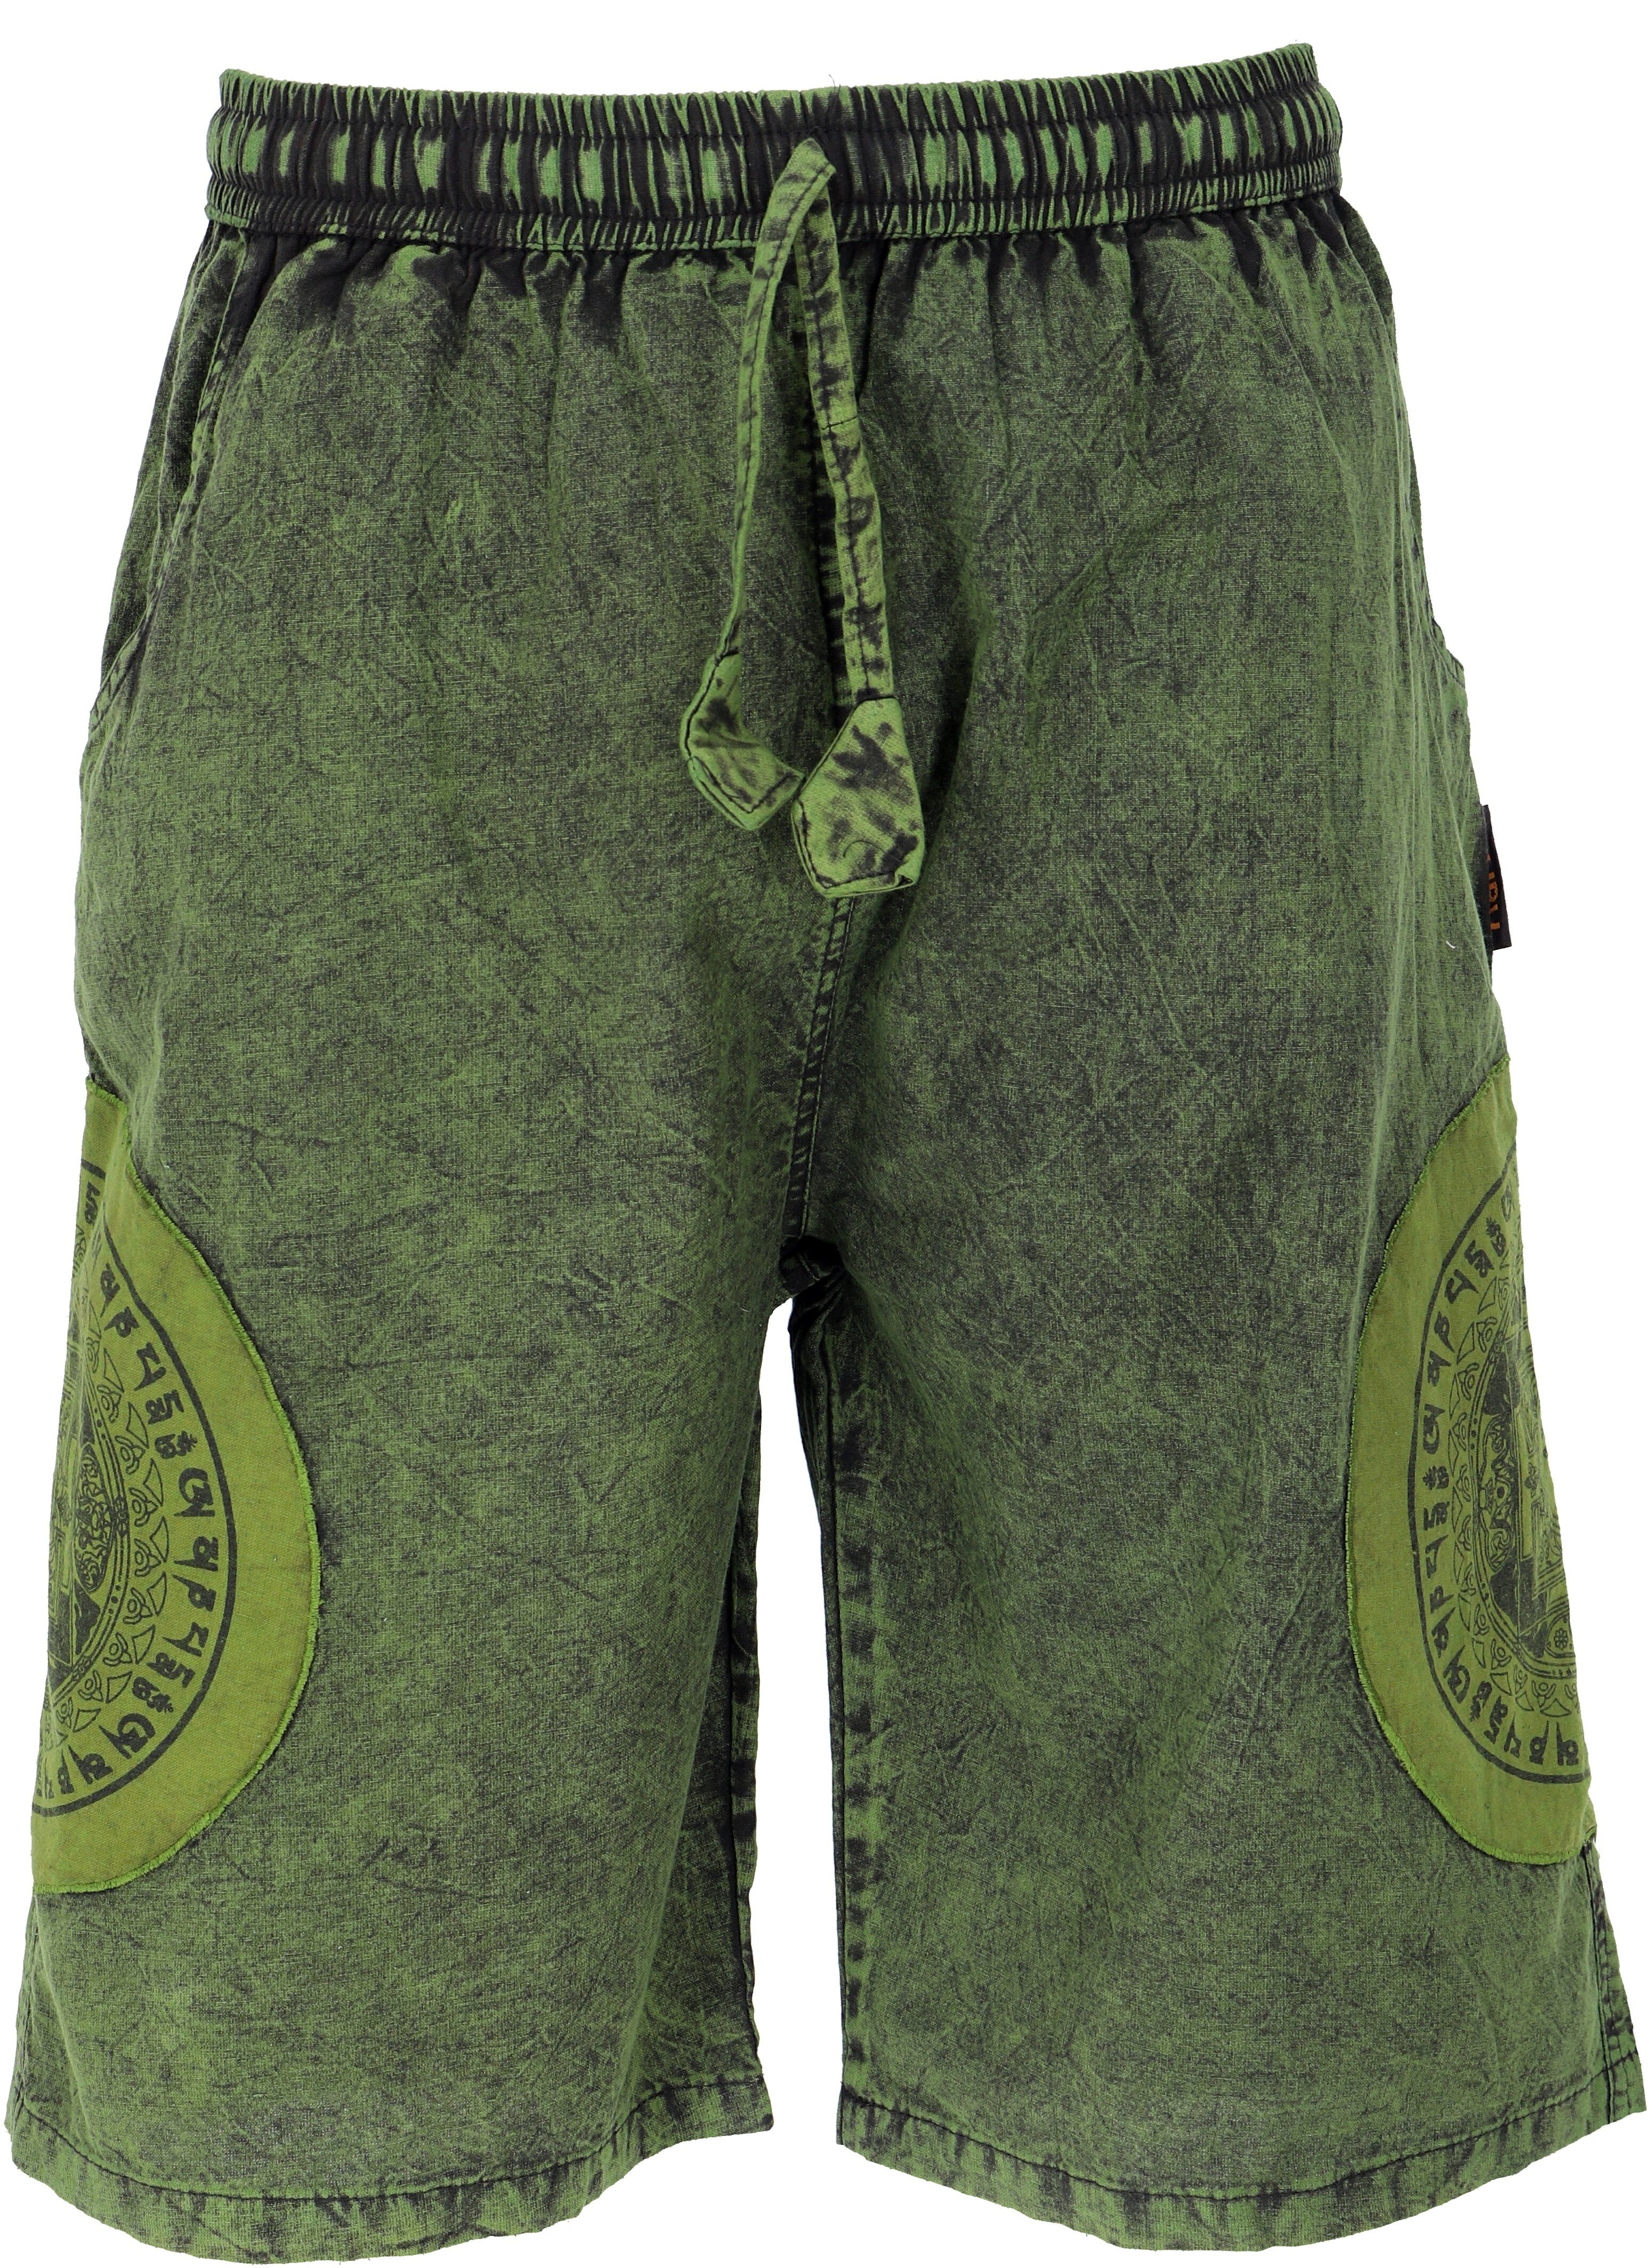 Guru-Shop Relaxhose Ethno Yogashorts, Stonwasch Patchwork Shorts.. Hippie, Ethno Style, alternative Bekleidung grün | Relaxhosen